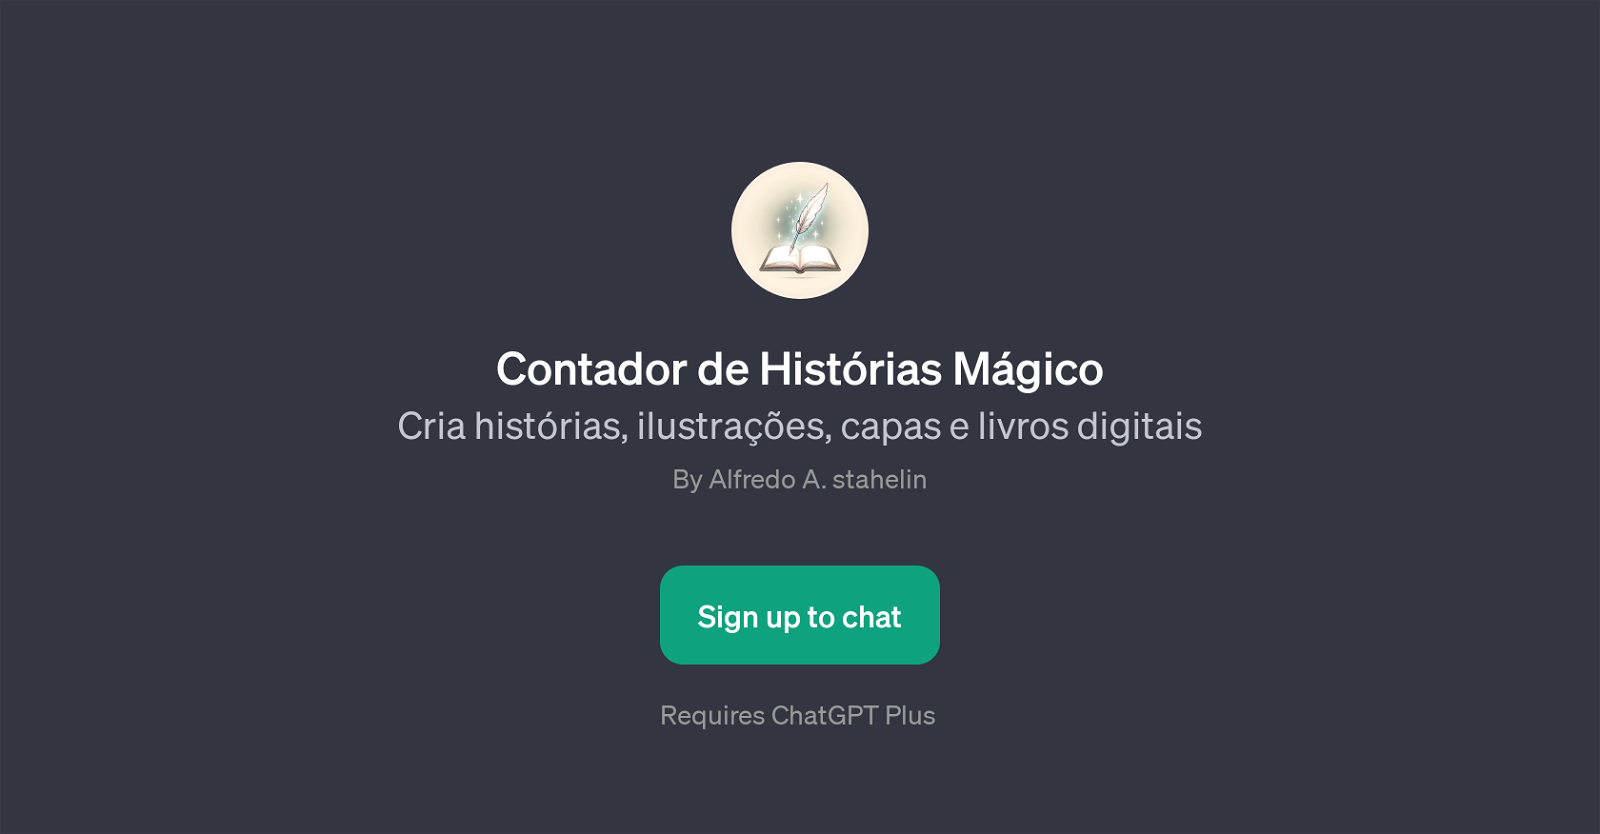 Contador de Histrias Mgico website